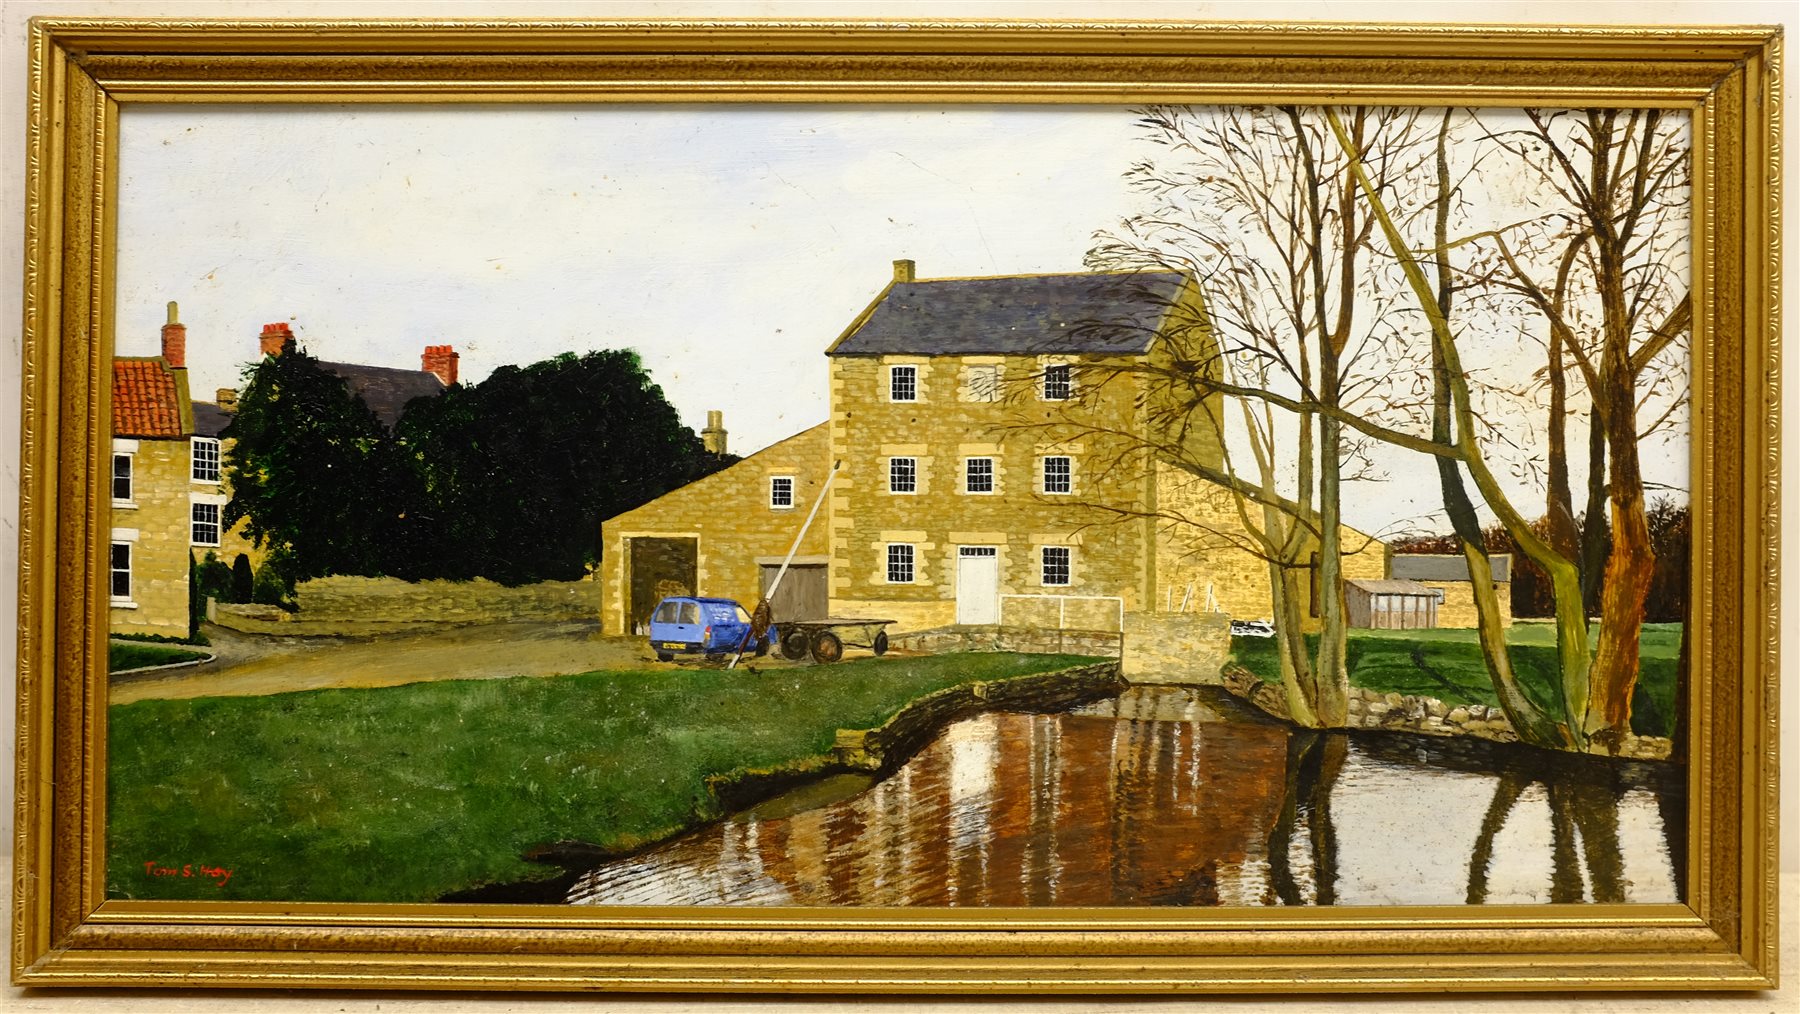 Tom S Hoy (British 20th century): West 'Ayton Mill' near Scarborough - Image 2 of 2